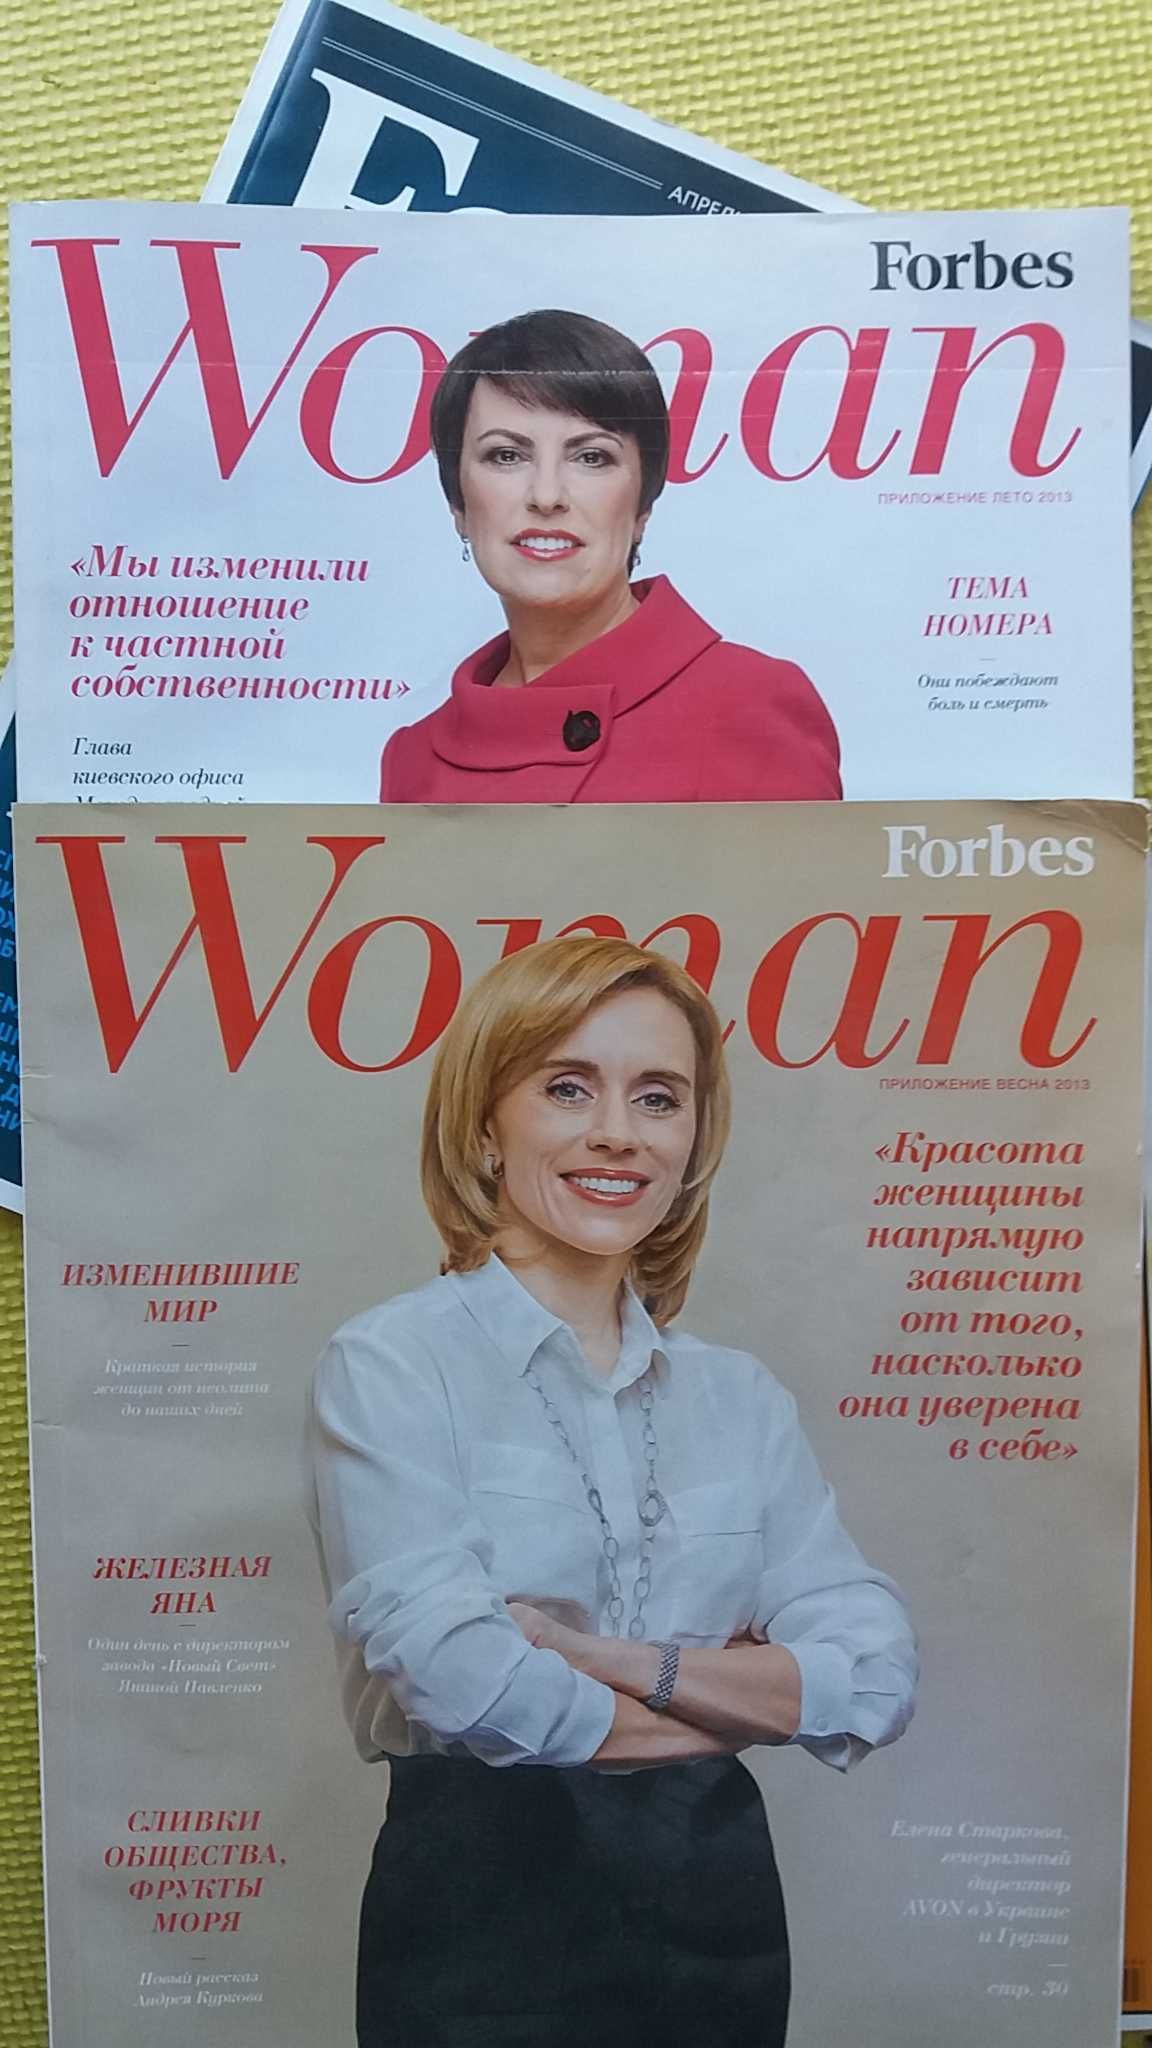 forbes woman business magazin бизнес журнал форбс